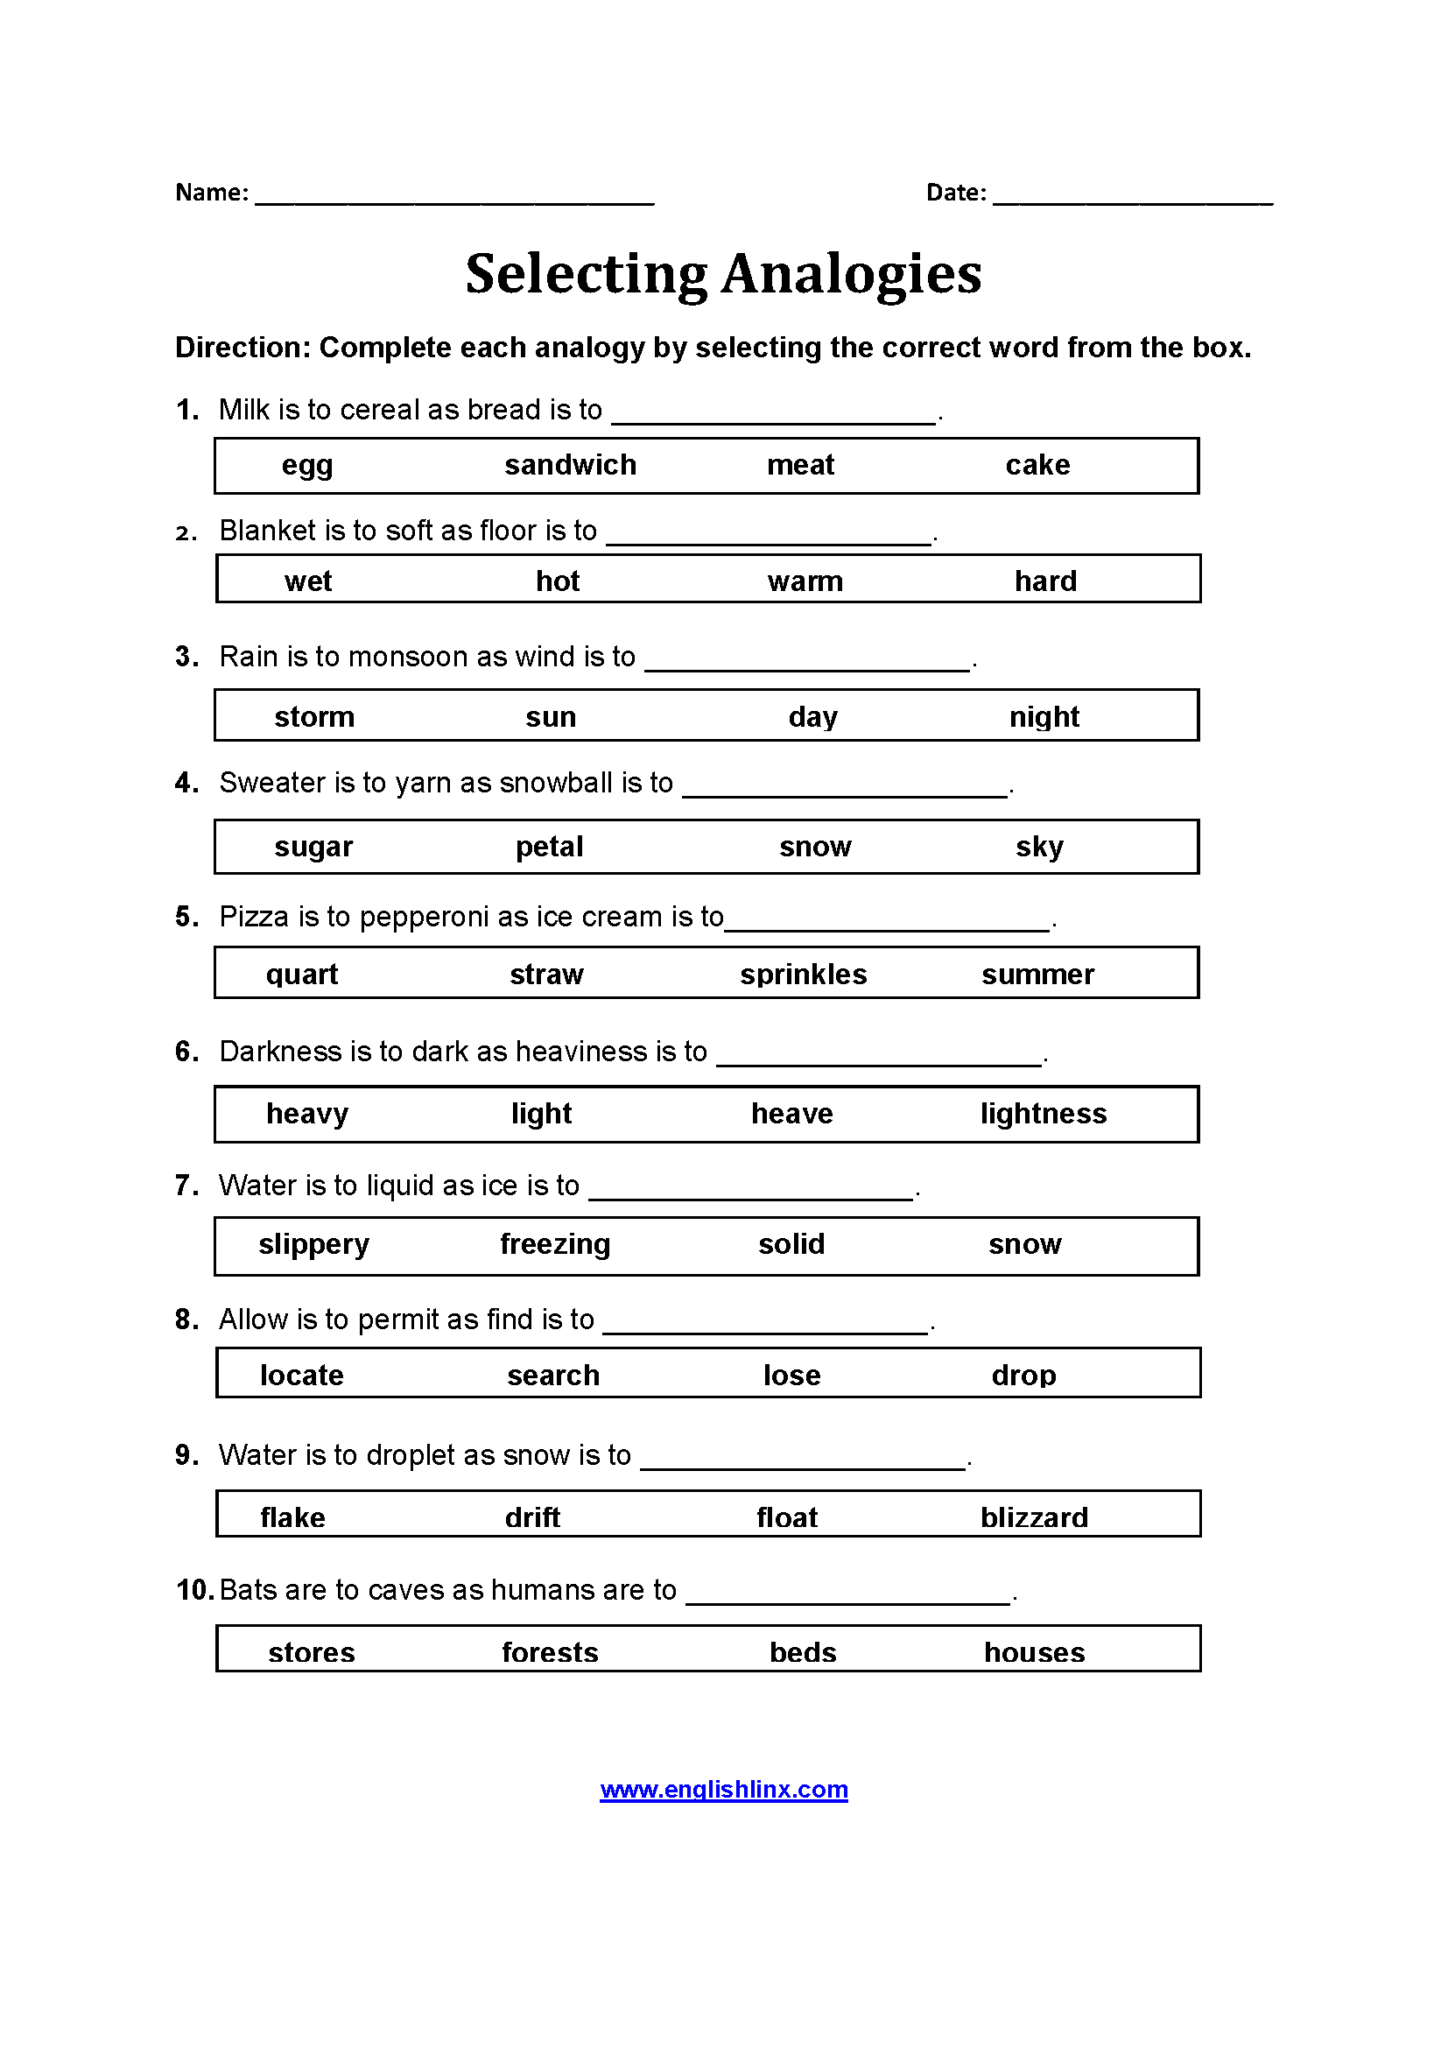 analogy-worksheets-for-middle-school-printables-159-lyana-worksheets